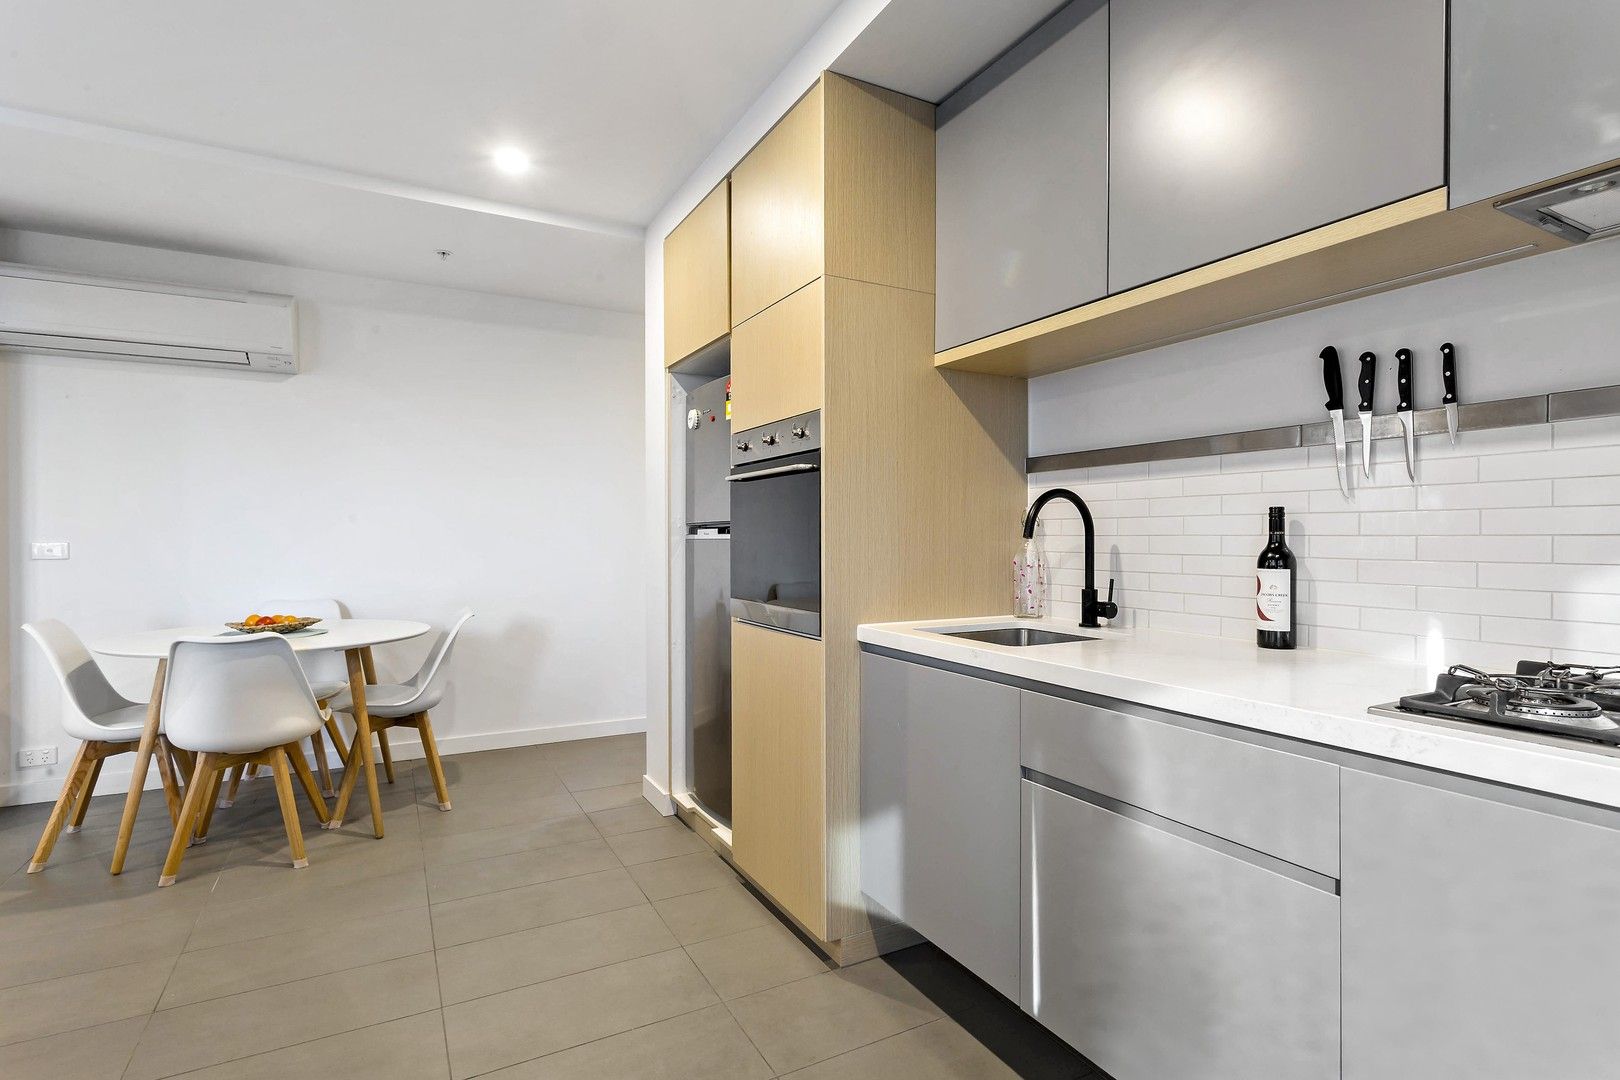 2 bedrooms Apartment / Unit / Flat in 511/132 Burnley Street RICHMOND VIC, 3121